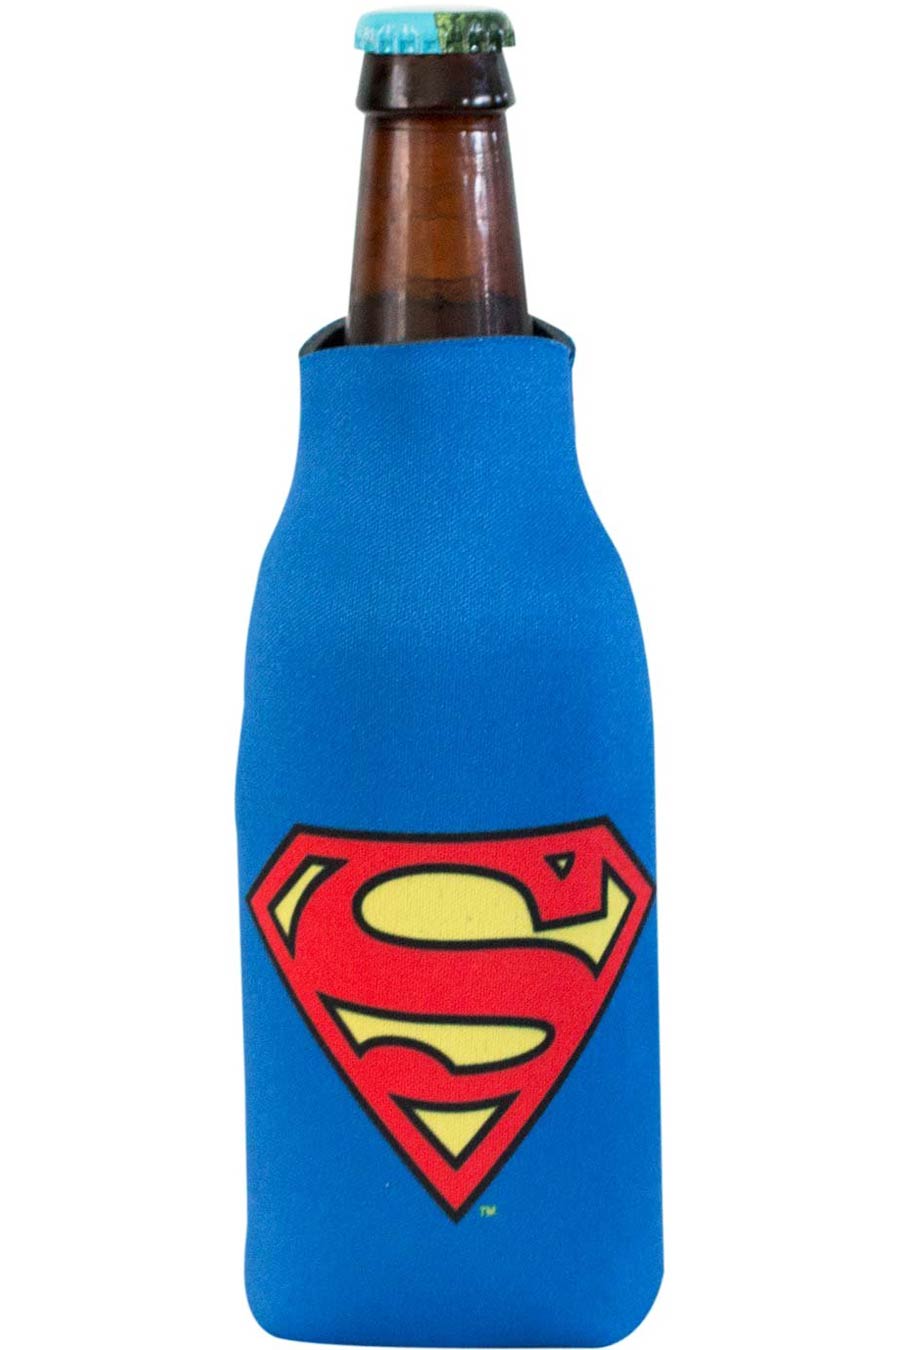 DC Comics Bottle Cooler - Superman Logo